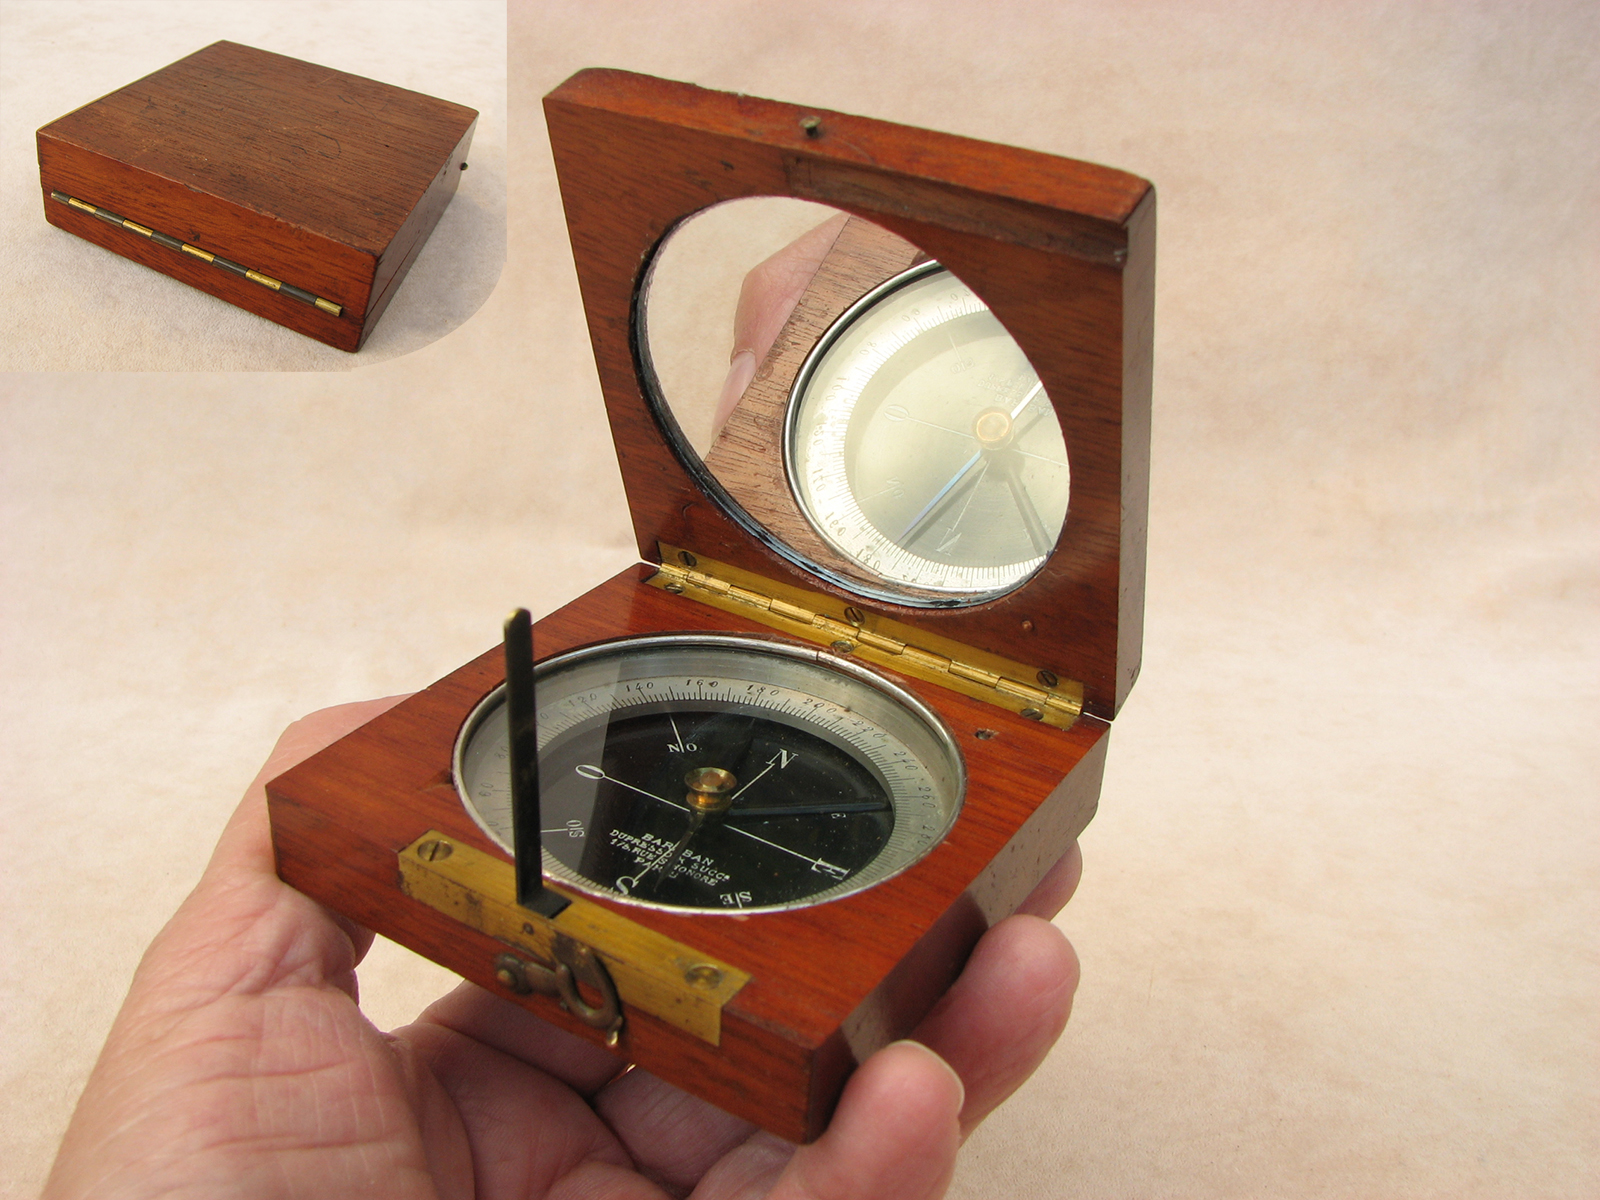 19th century French pocket compass signed BARABAN, DUPRESSOIR SUCCr, PARIS